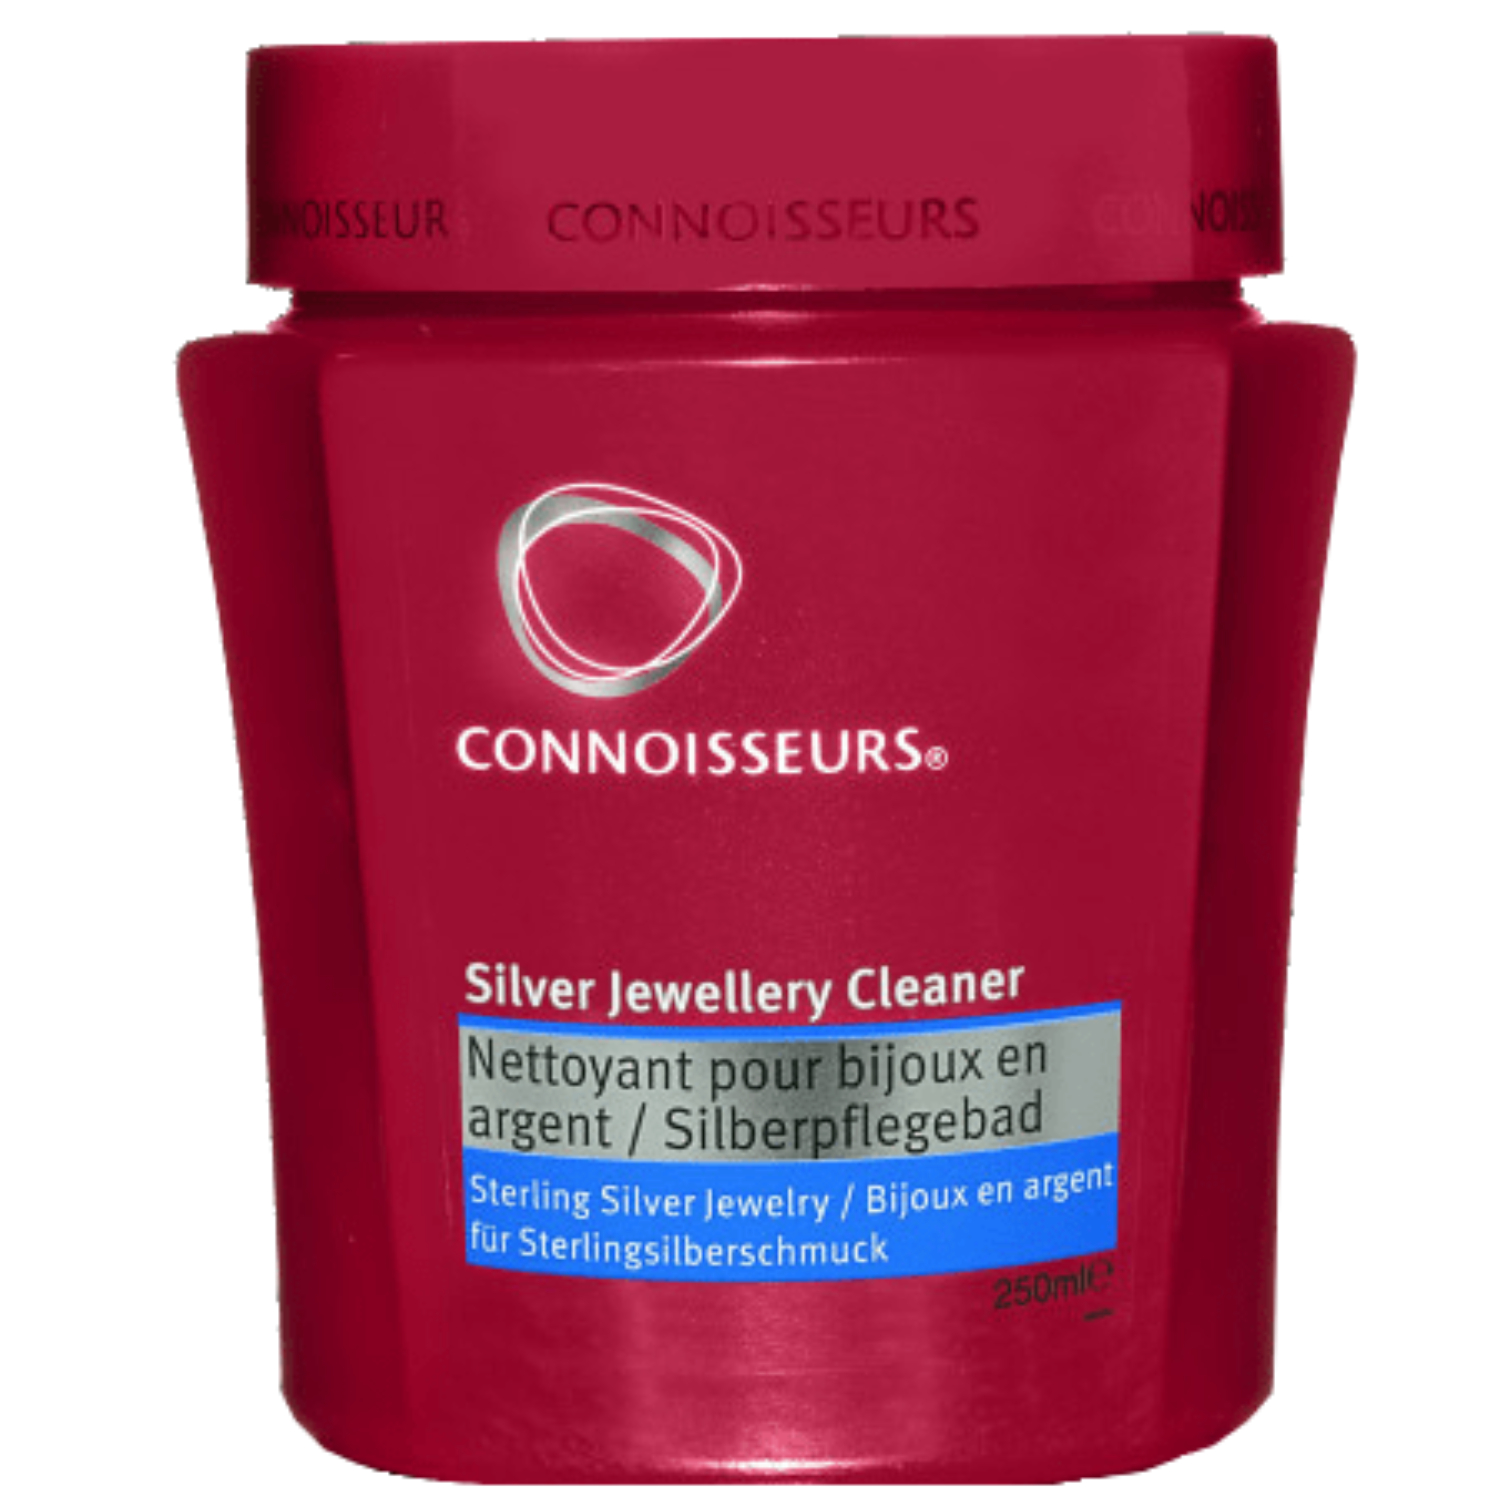 CONNOISSEURS Silver Jewellery Cleaner, 250ml <br/>Anwendung: reinigt Silber